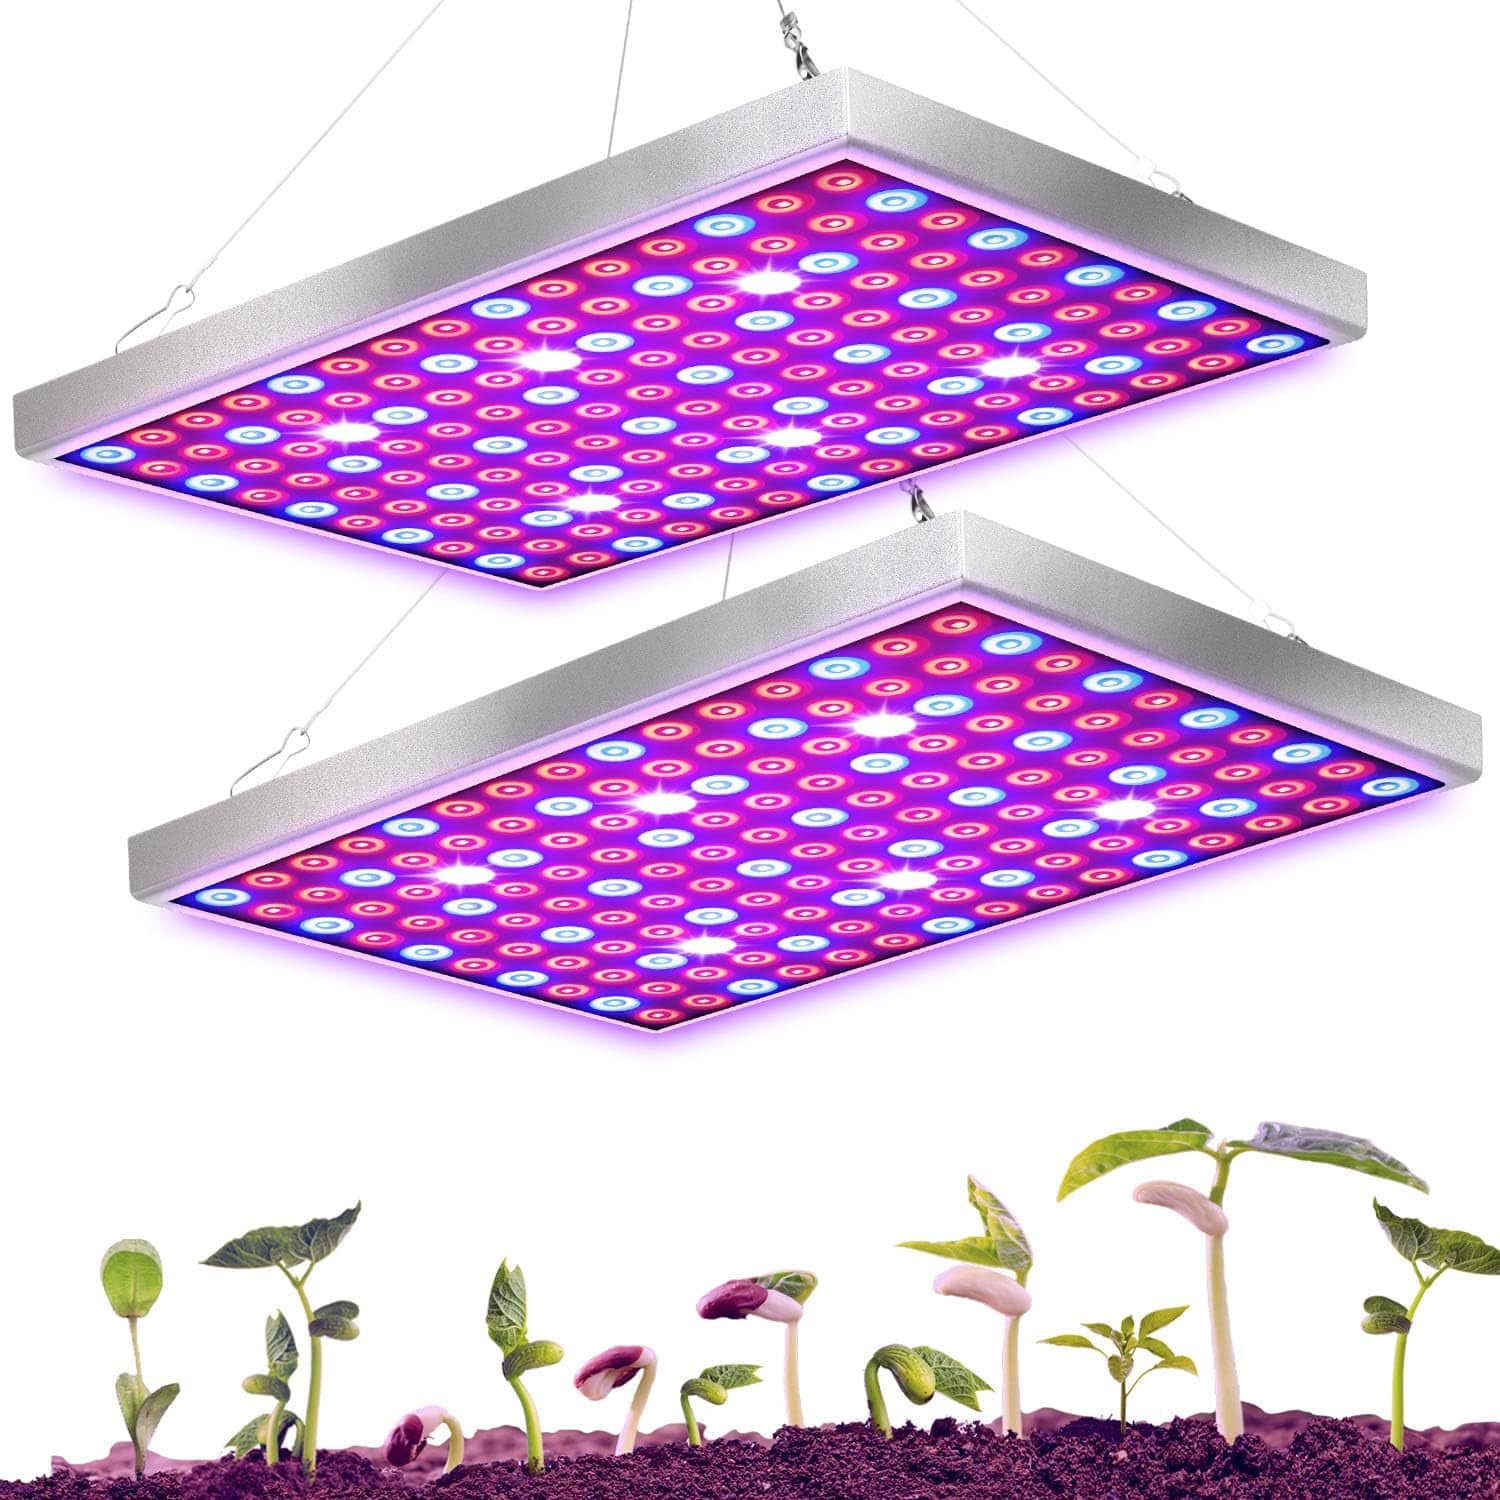 Diboys LED Grow Light for Indoor Plants, 45W Plant Lights Full Spectrum Panel Grow Light for Seedlings, Succulents, Micro Greens, Vegetable and Flower, 2 Pack